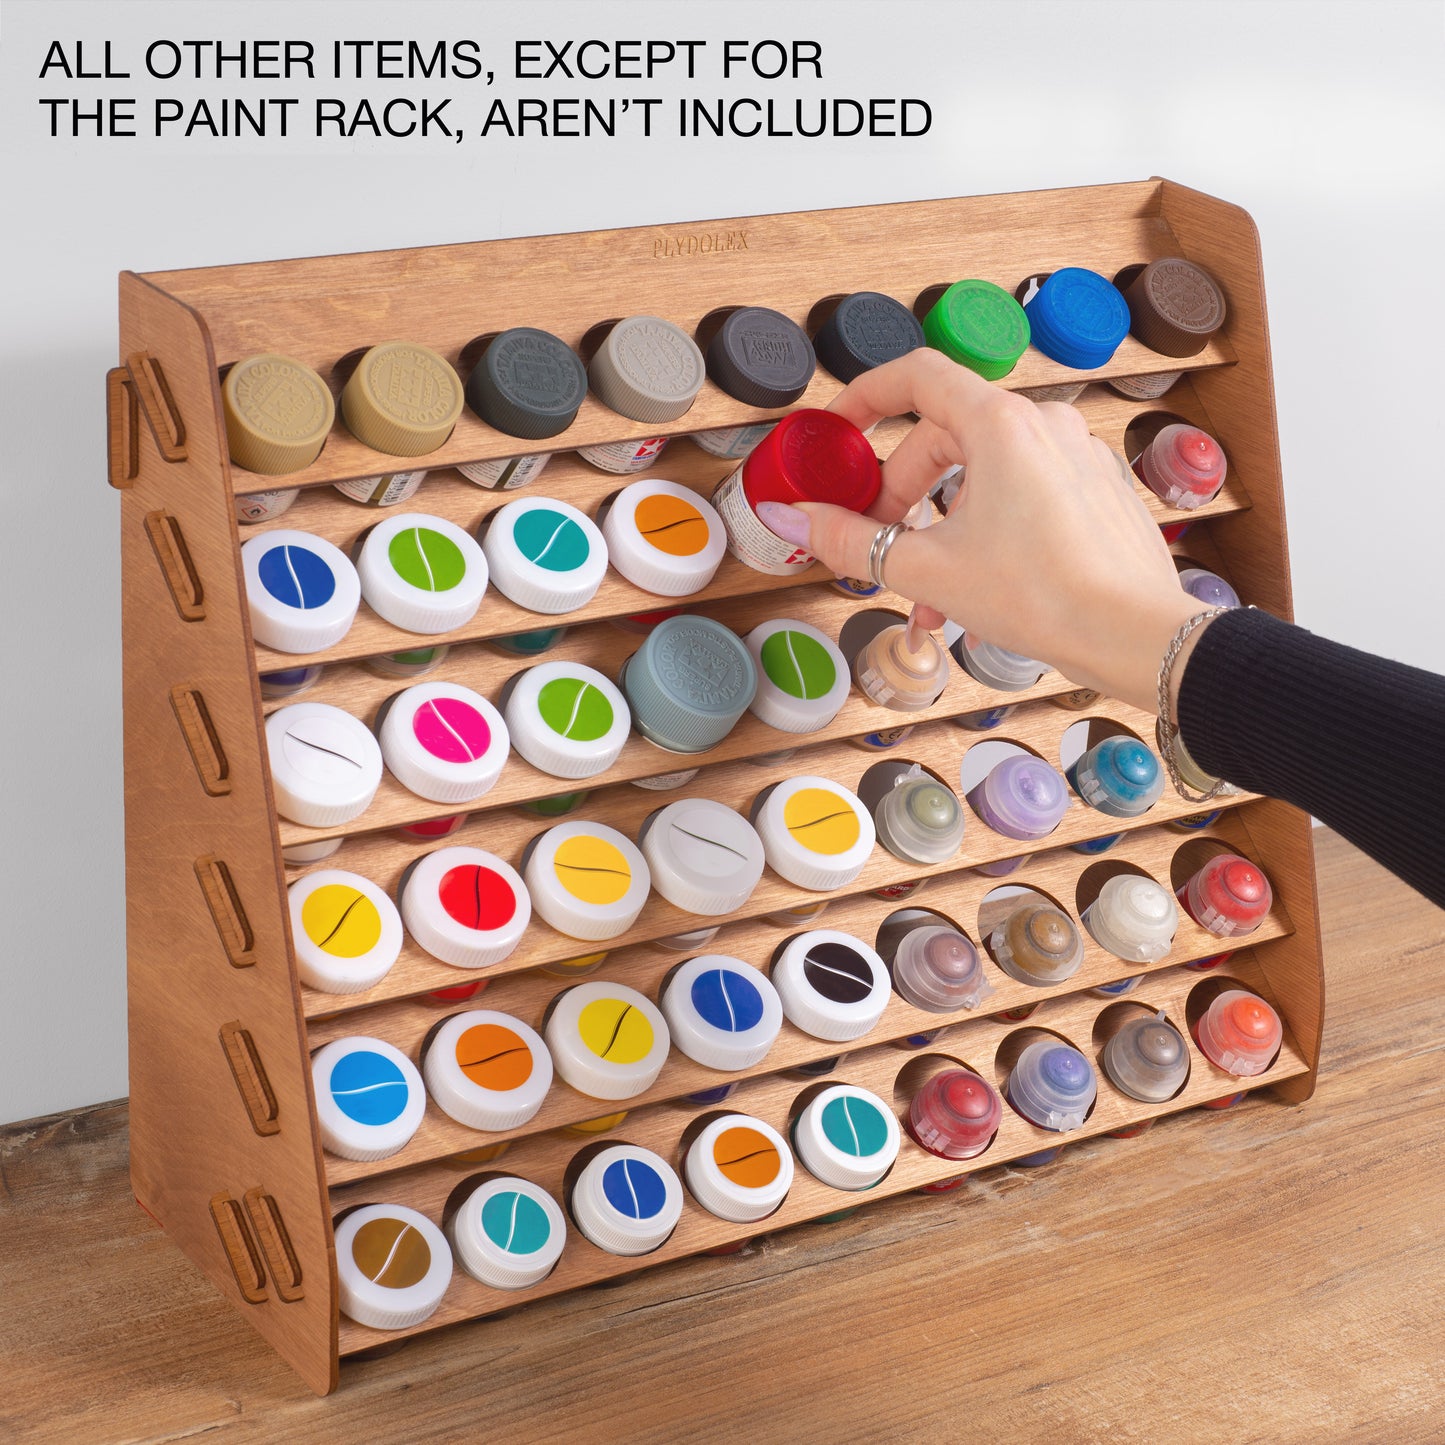 Plydolex Paint Rack Organizer with 72 Holes Suitable for Vallejo Paints -  Wall-mounted Wooden Paint Storage Rack for Miniature Paint Set - Craft  Paint